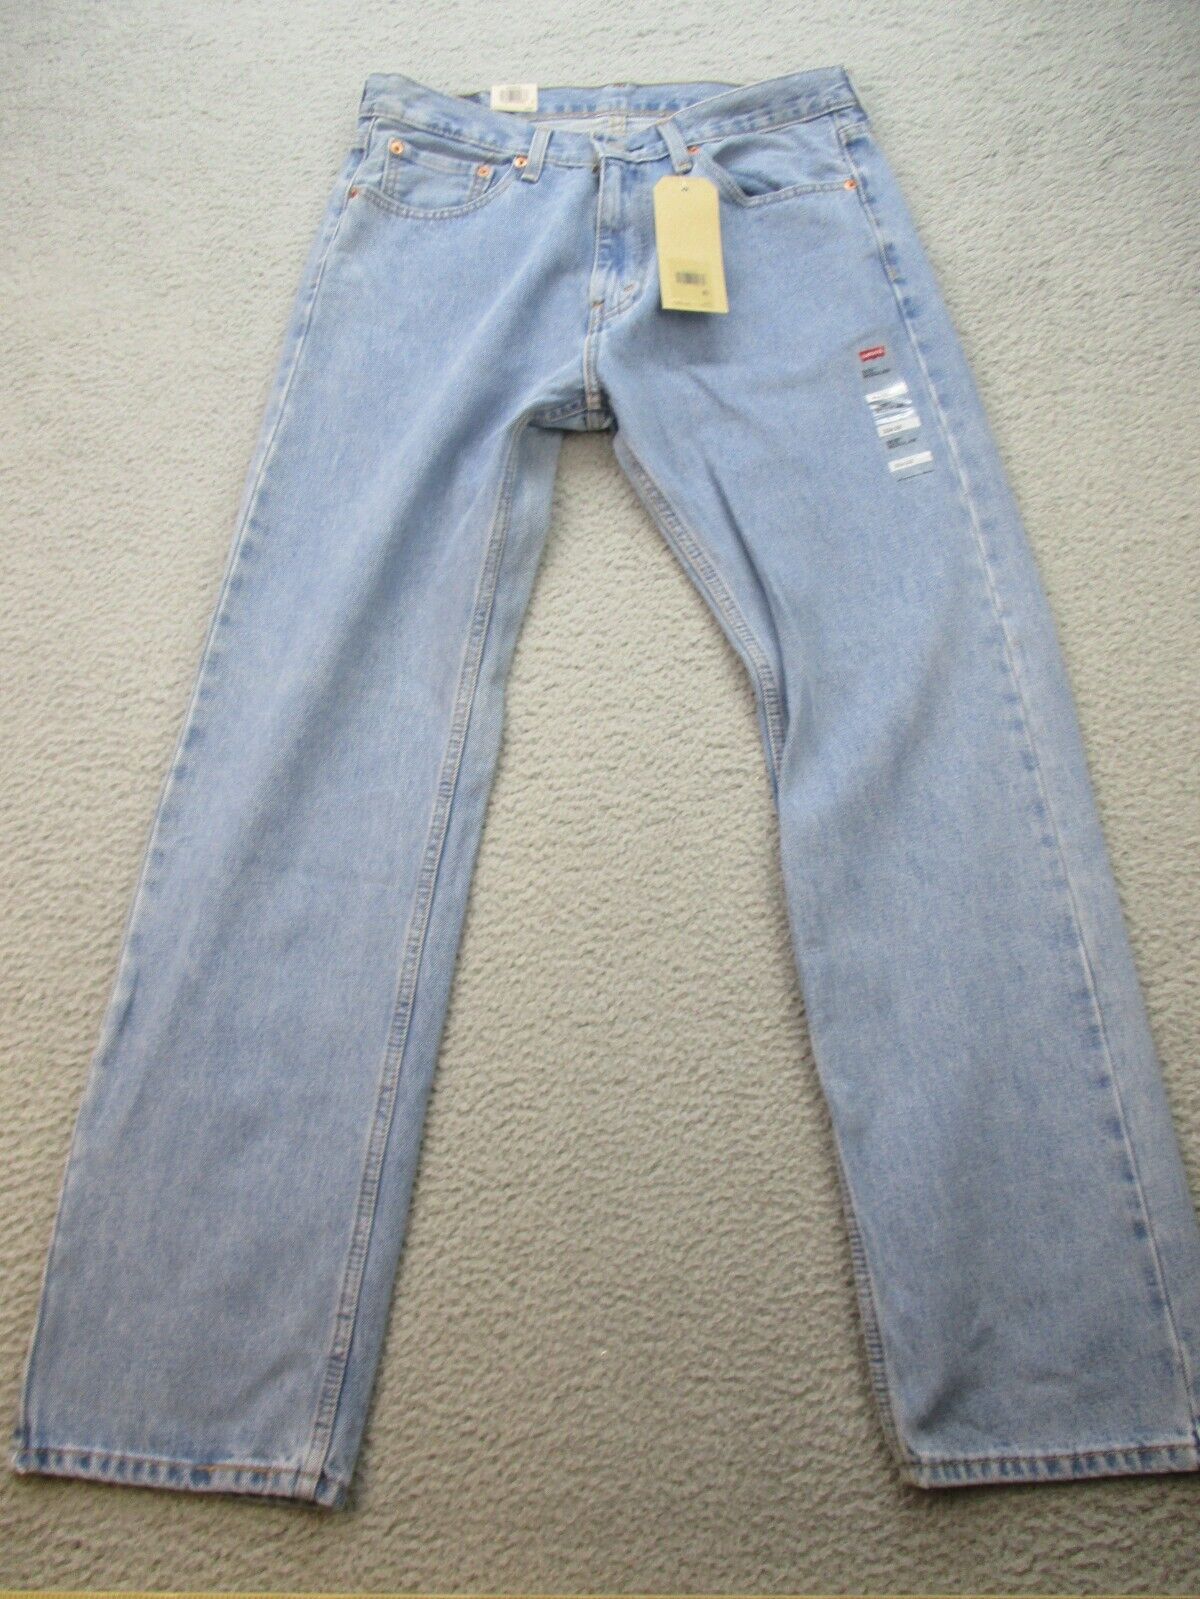 Levi’s 505 Jeans 32 x 31 (Tag 33x32) Light Wash Regular Straight Leg Cowboy NWT